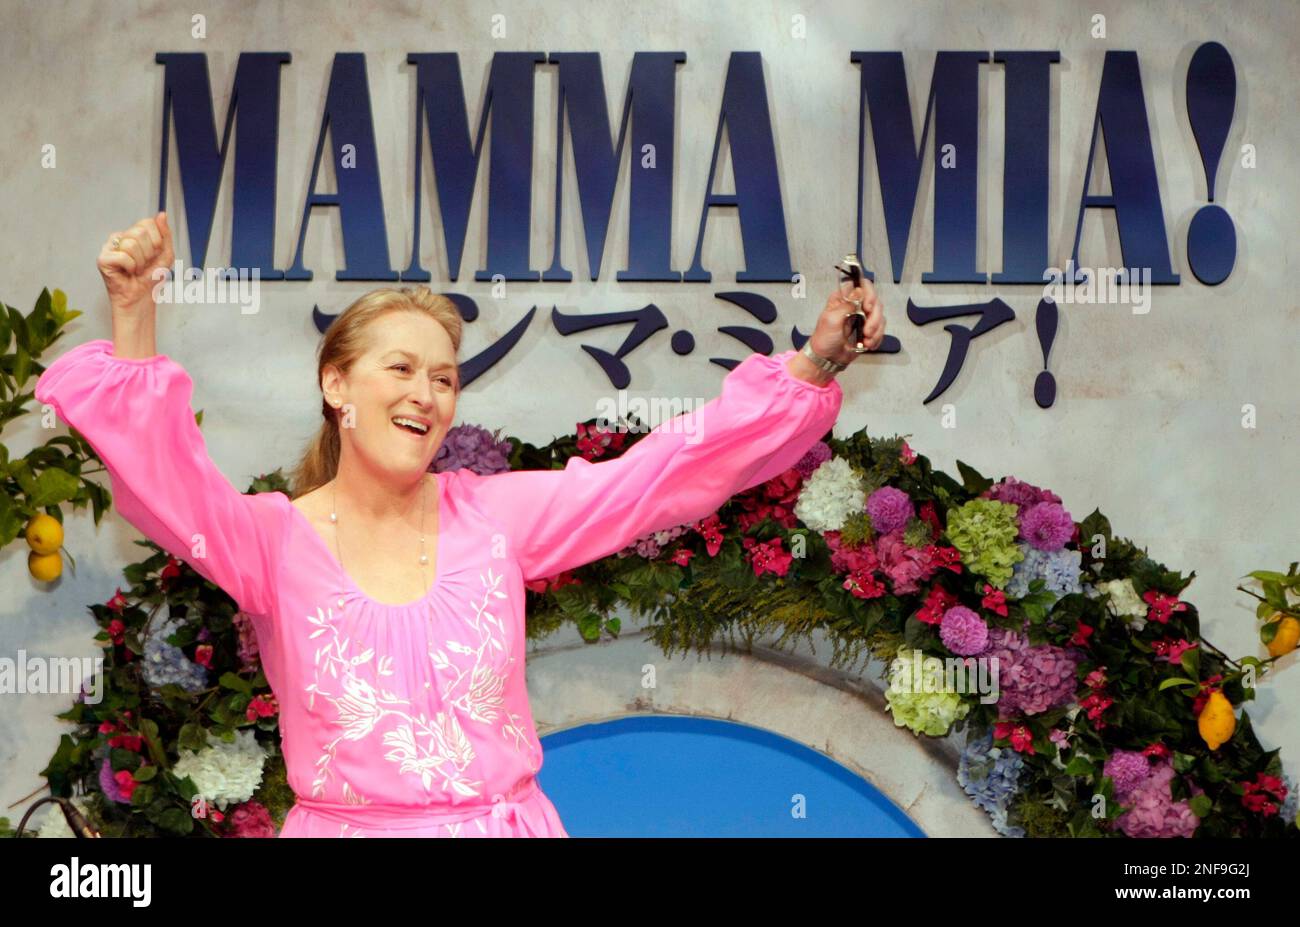 U.S. actress Meryl Streep dances during a promotion of the movie "Mamma Mia!"  in Tokyo, Japan, Thursday, Jan. 22, 2009. (AP Photo/Shizuo Kambayashi Stock  Photo - Alamy